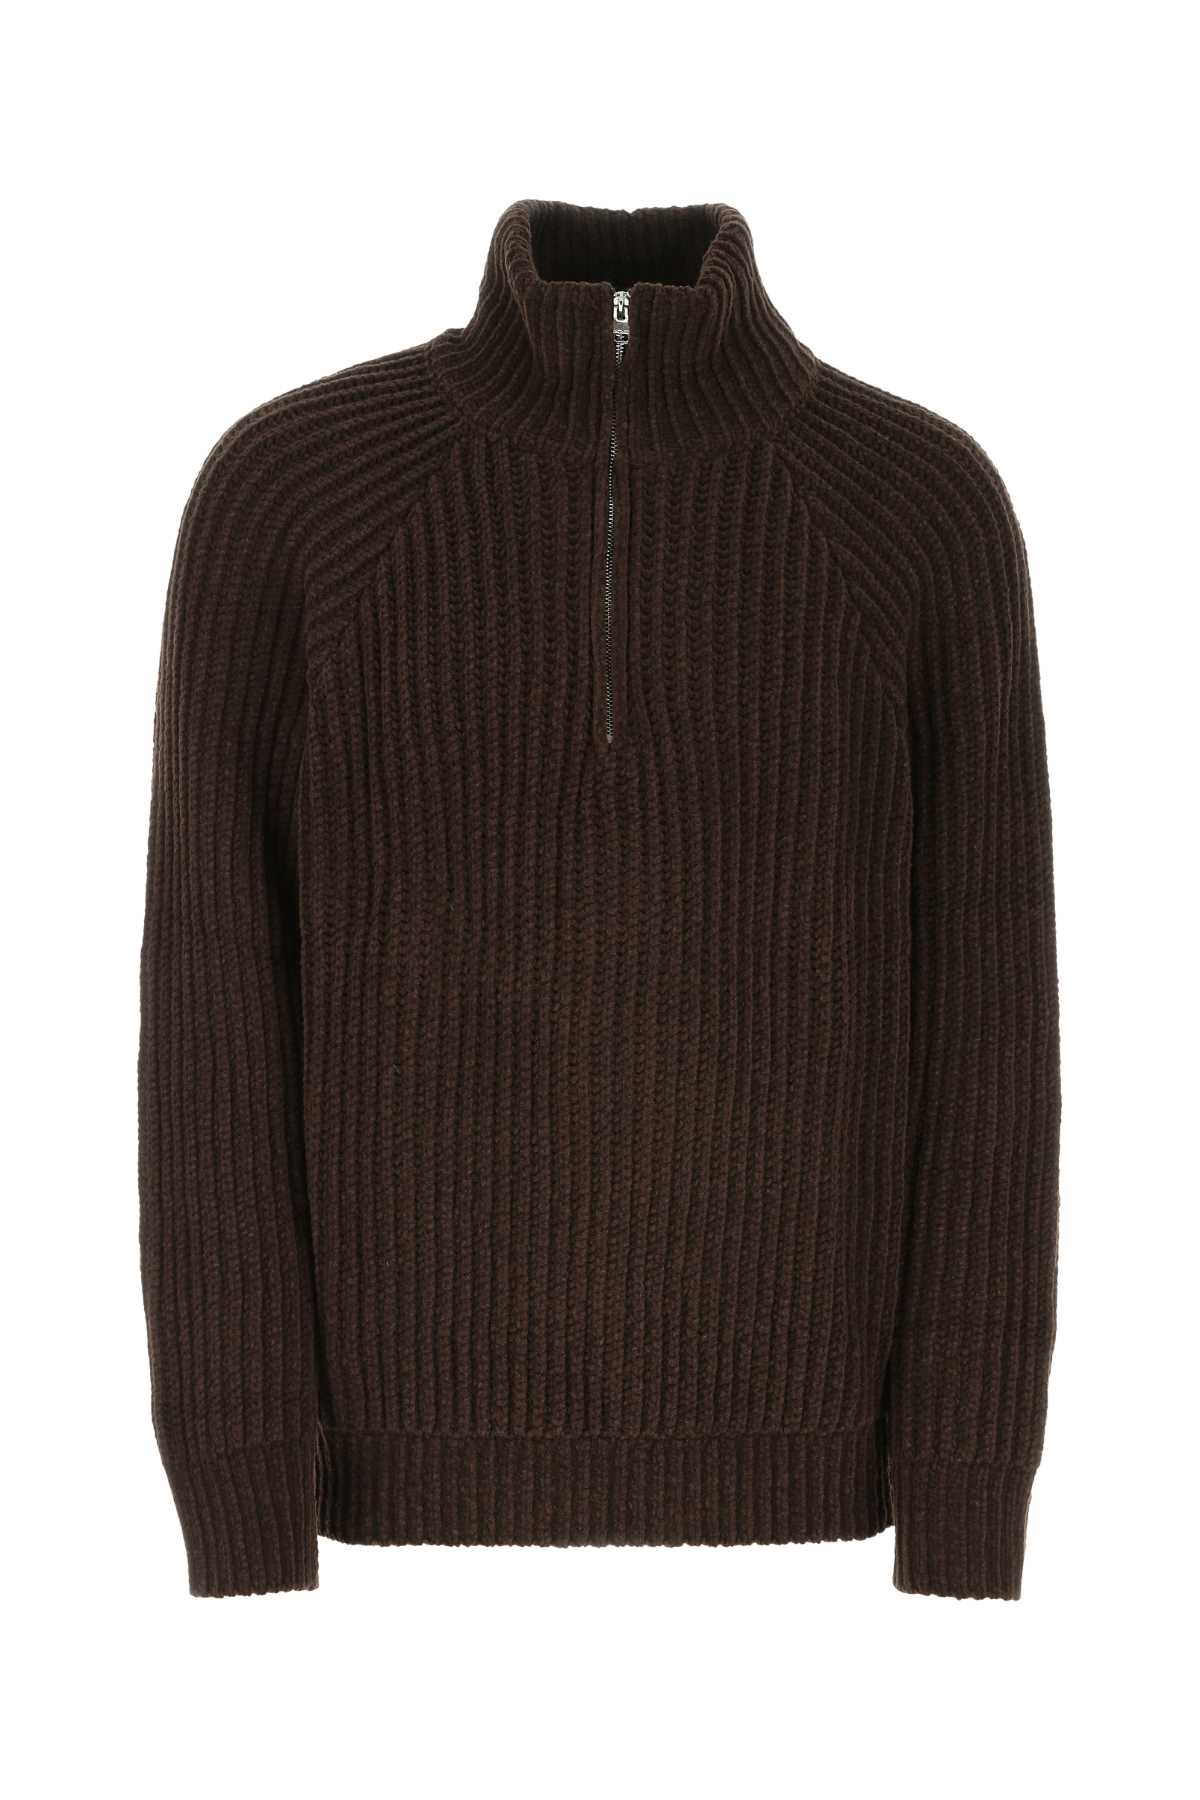 Études Chocolate Wool Blend Sweater